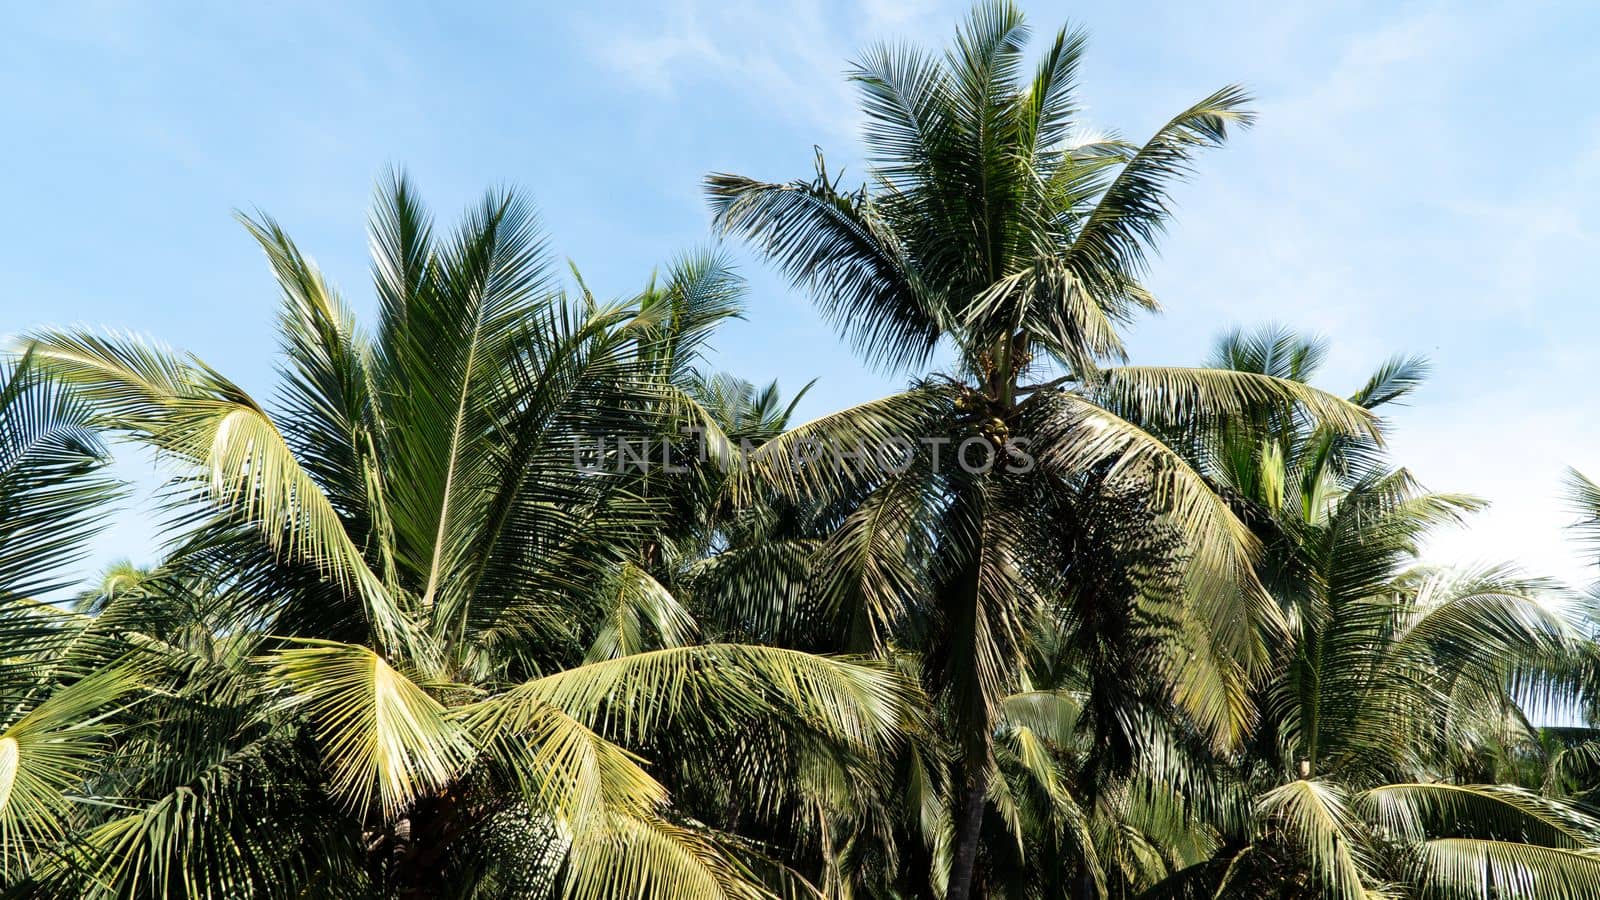 Palm grove against the blue sky, jungle, place for inscription. High quality photo